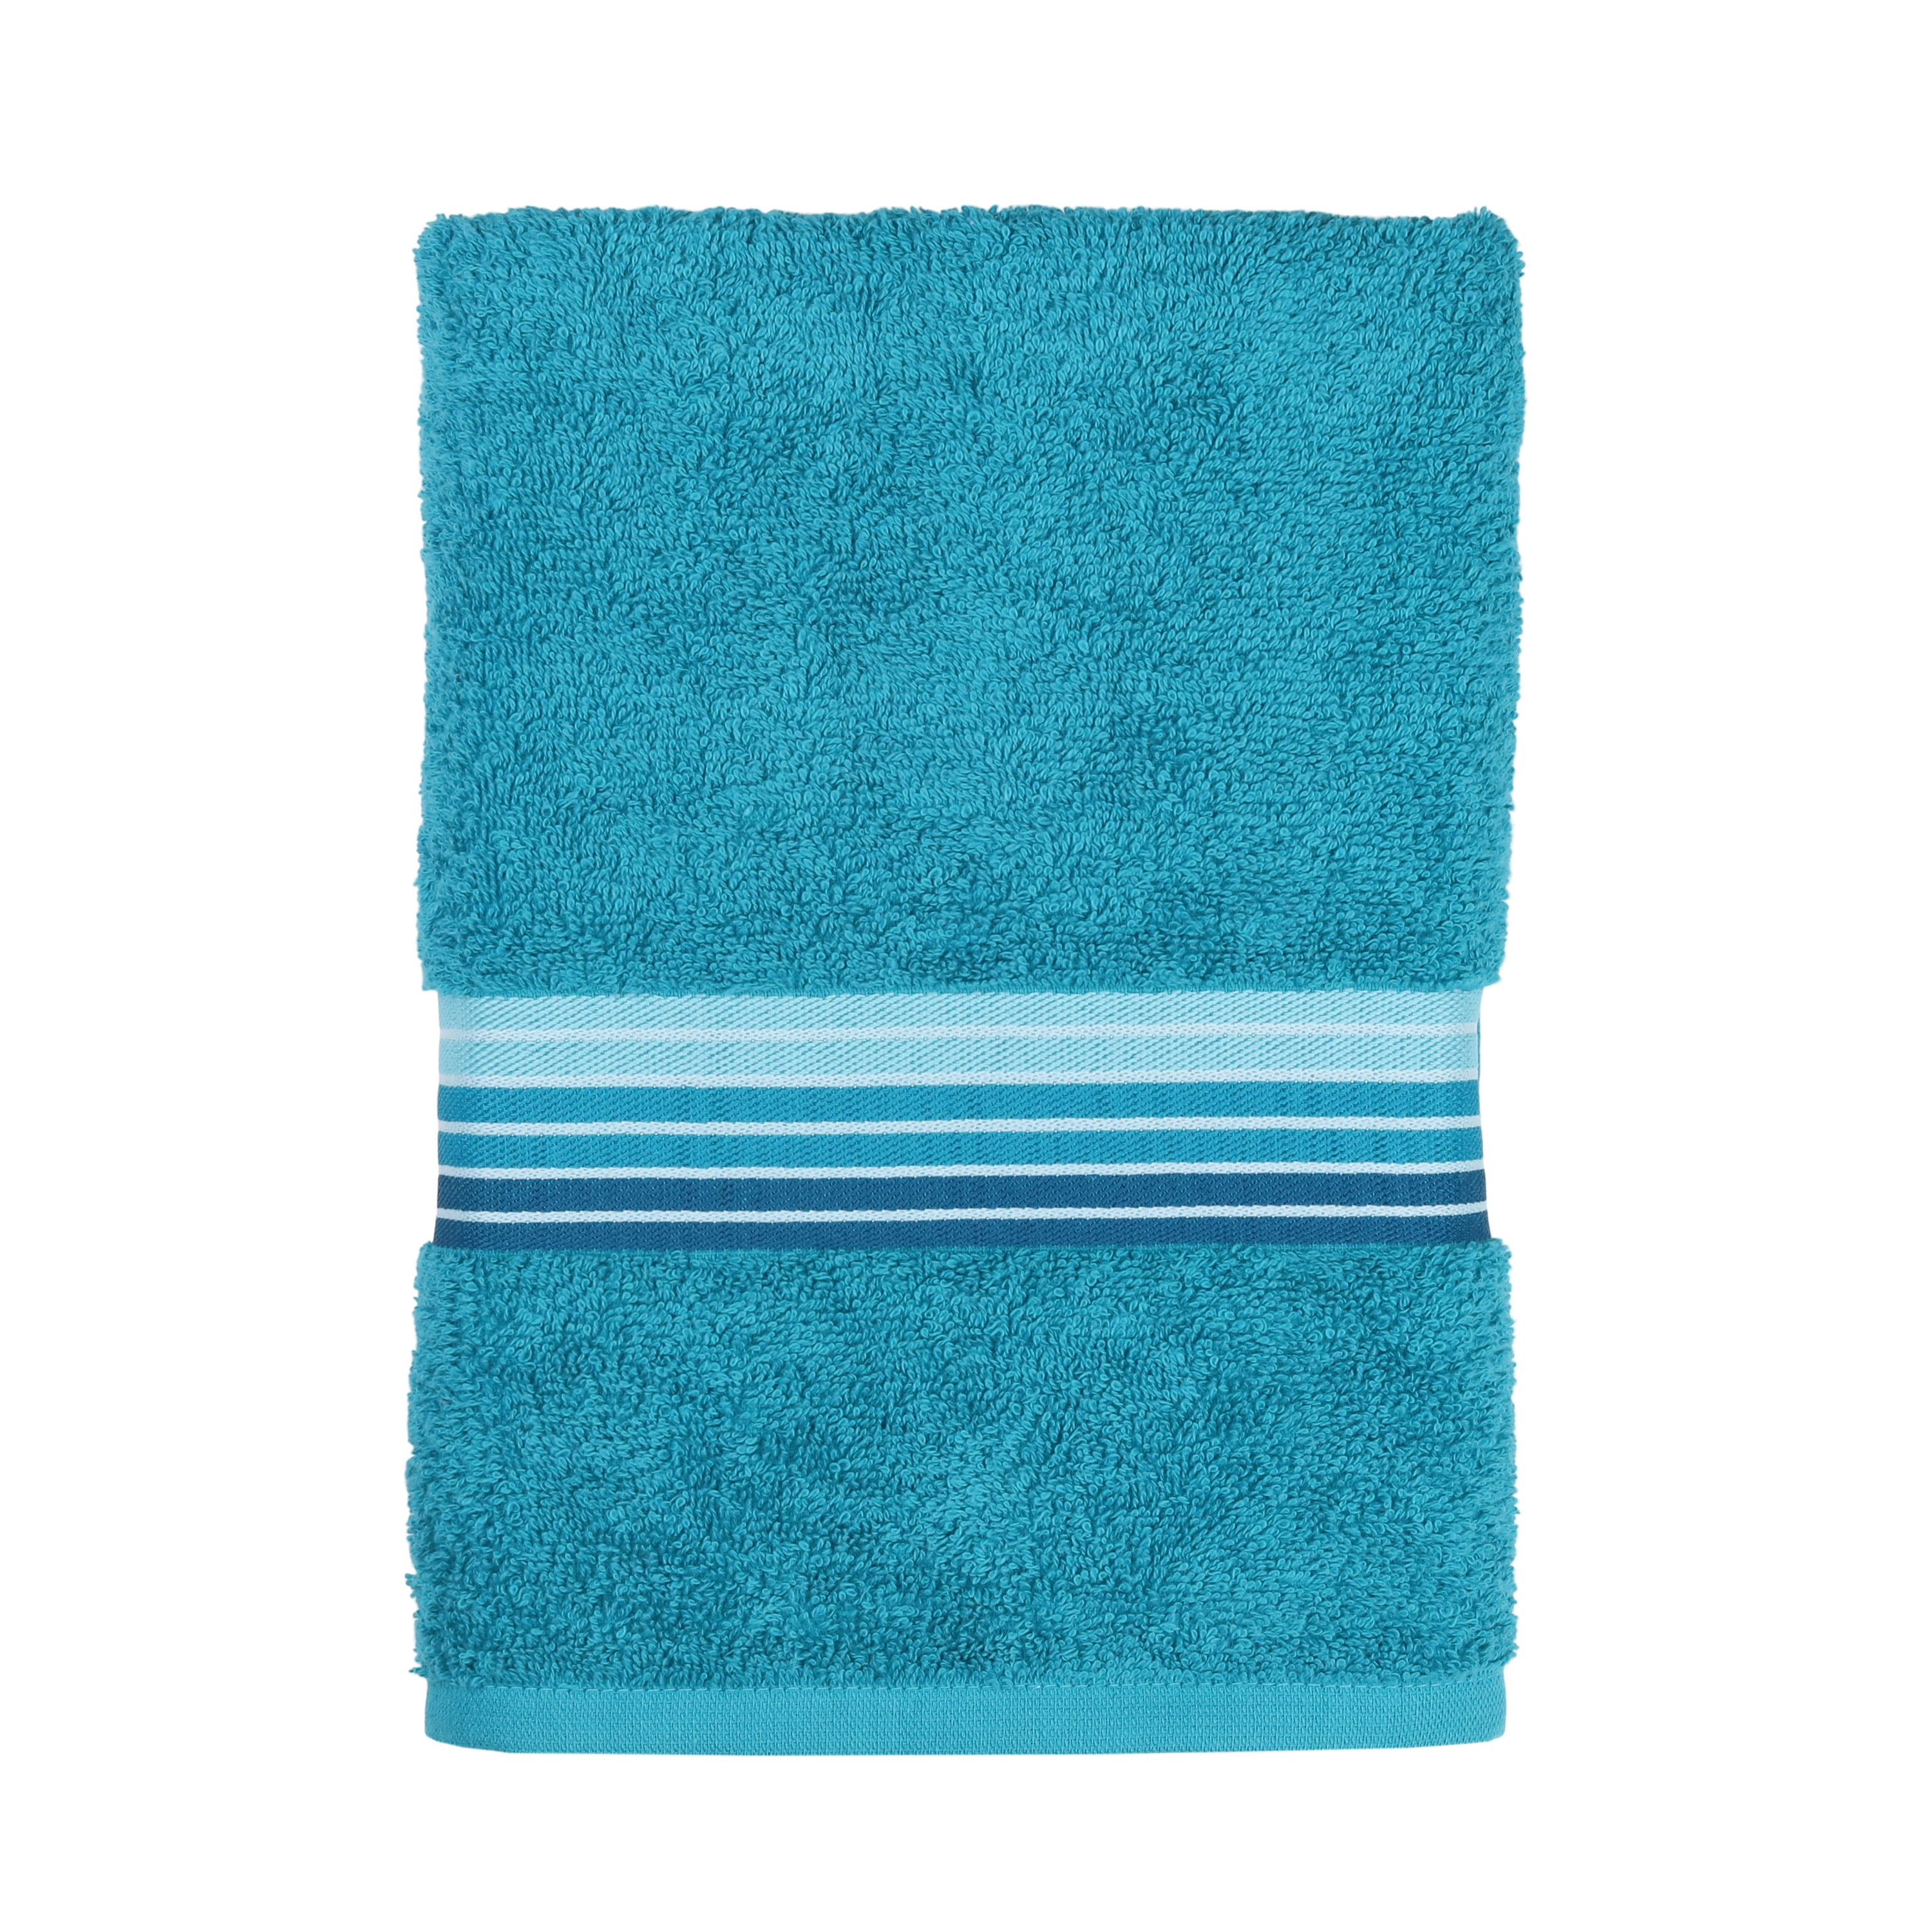 Mainstays Ombre Stripe Bath Towel, Turquoise - Walmart.com